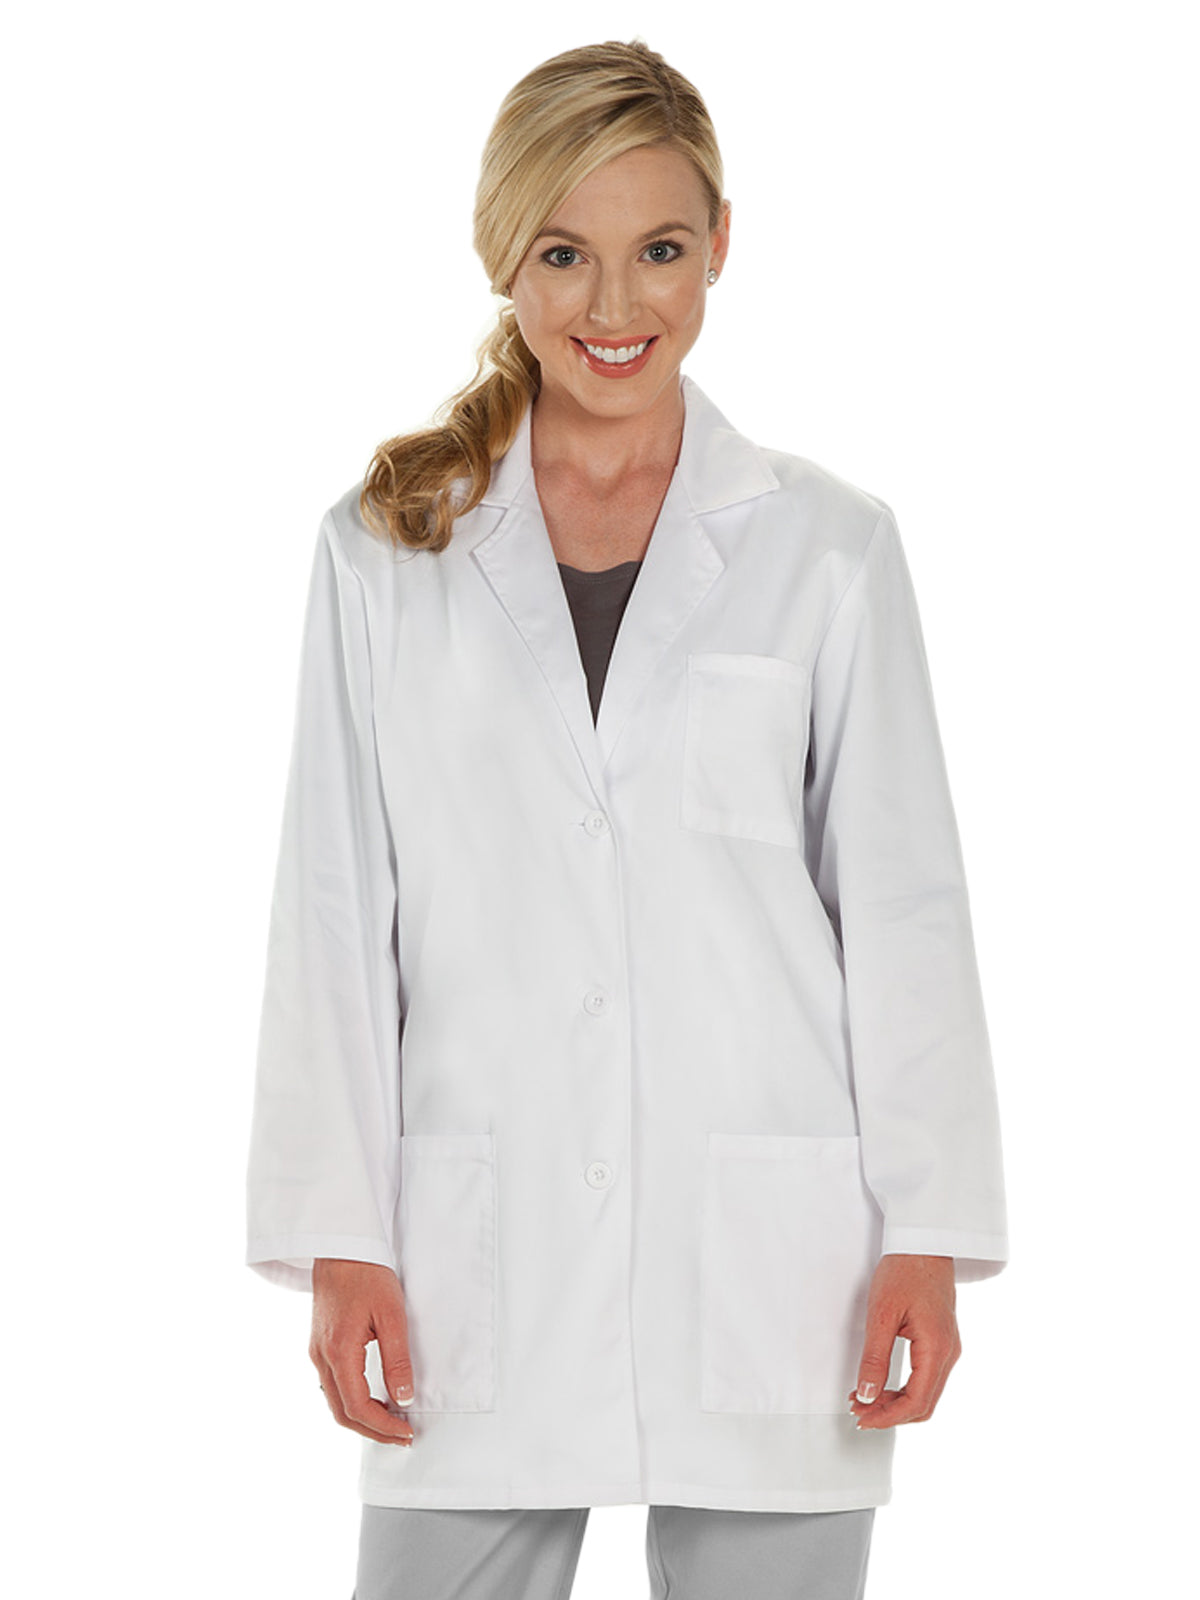 Women's Five-Pocket Consultation Lab Coat - 5740 - White